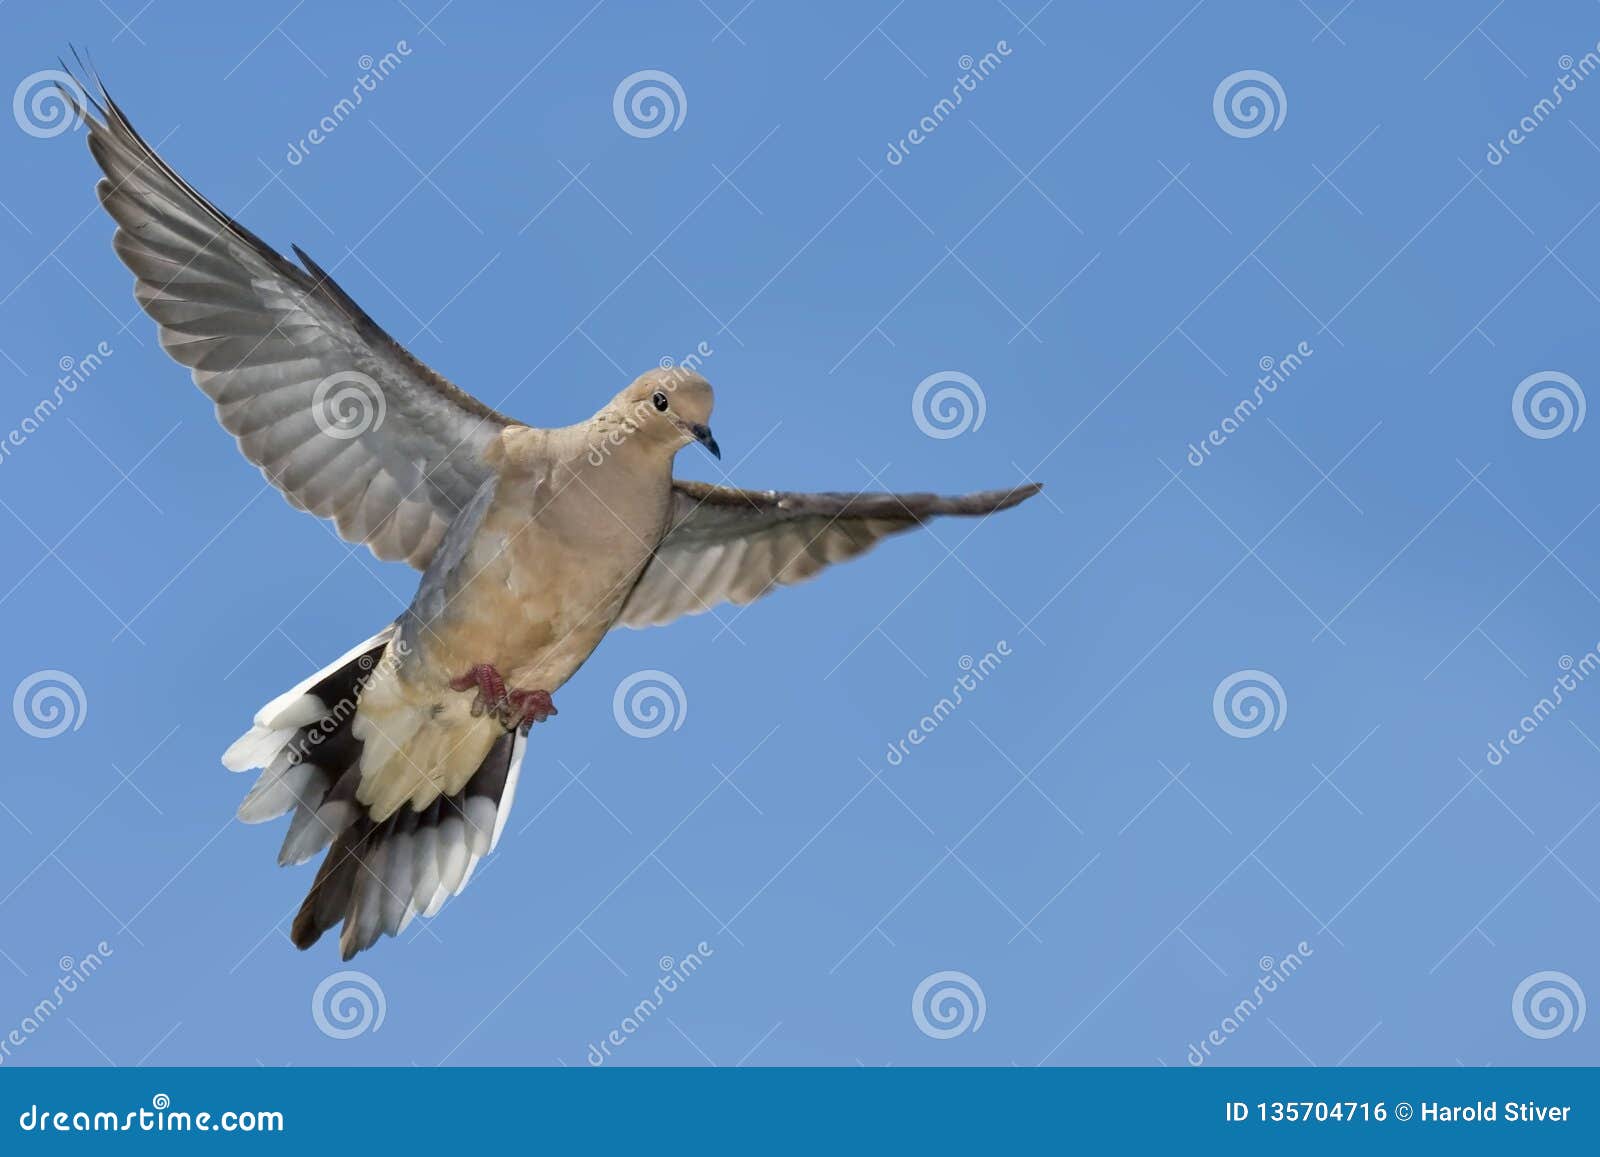 mourning dove, zenaida macroura, in flight